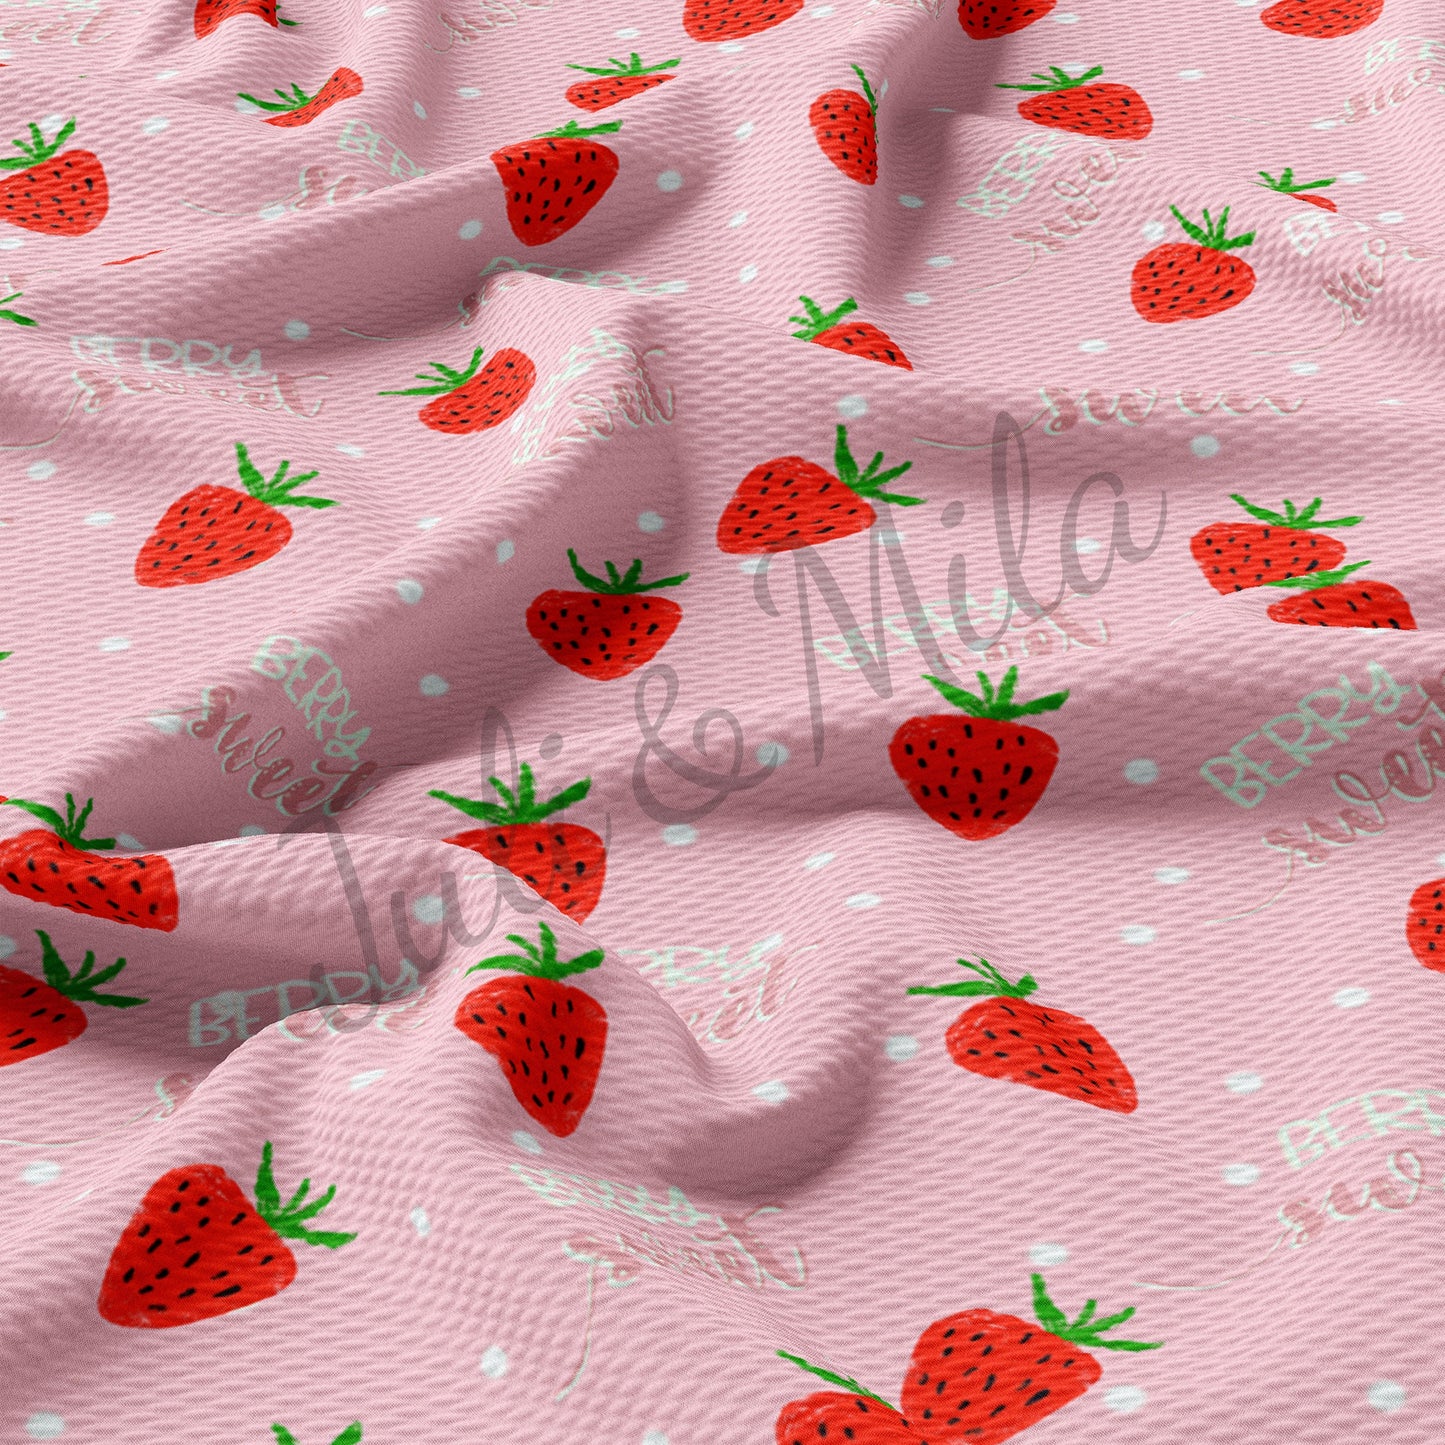 Berry Sweet Bullet Fabric AA326